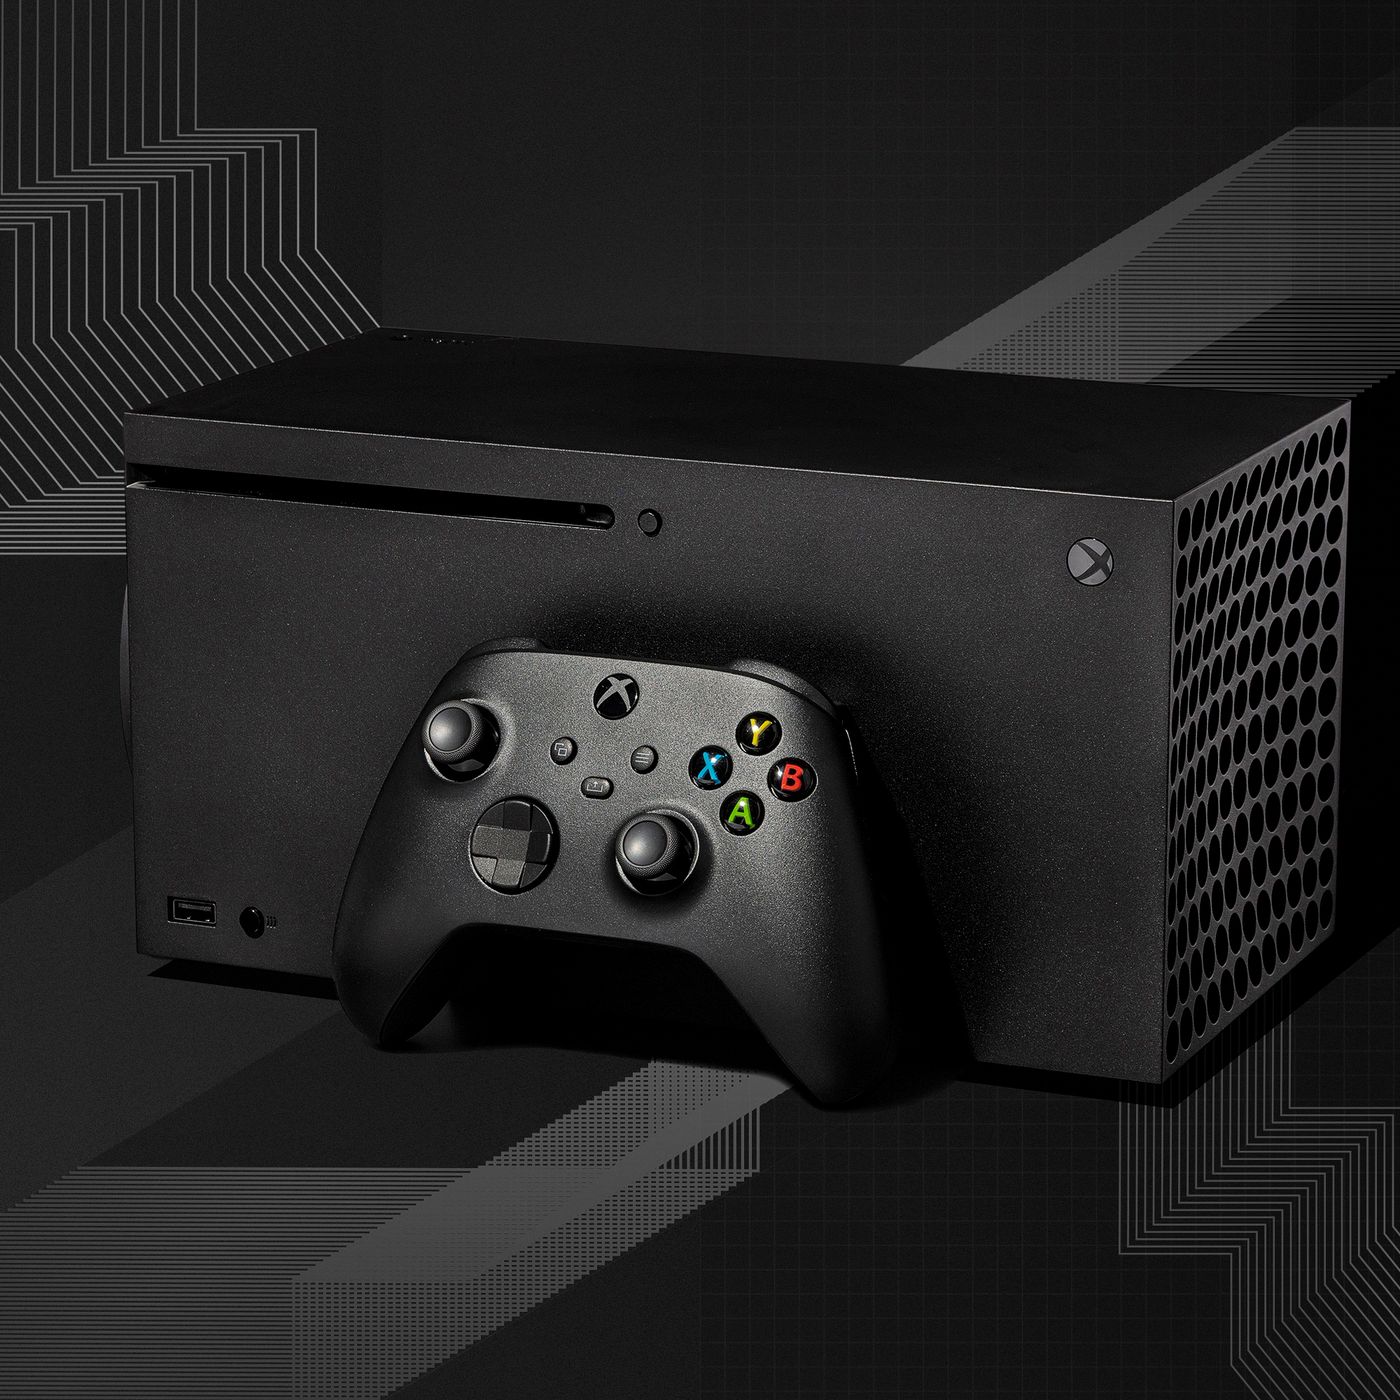 Xbox Series X review: Microsoft recaptures the magic of the Xbox